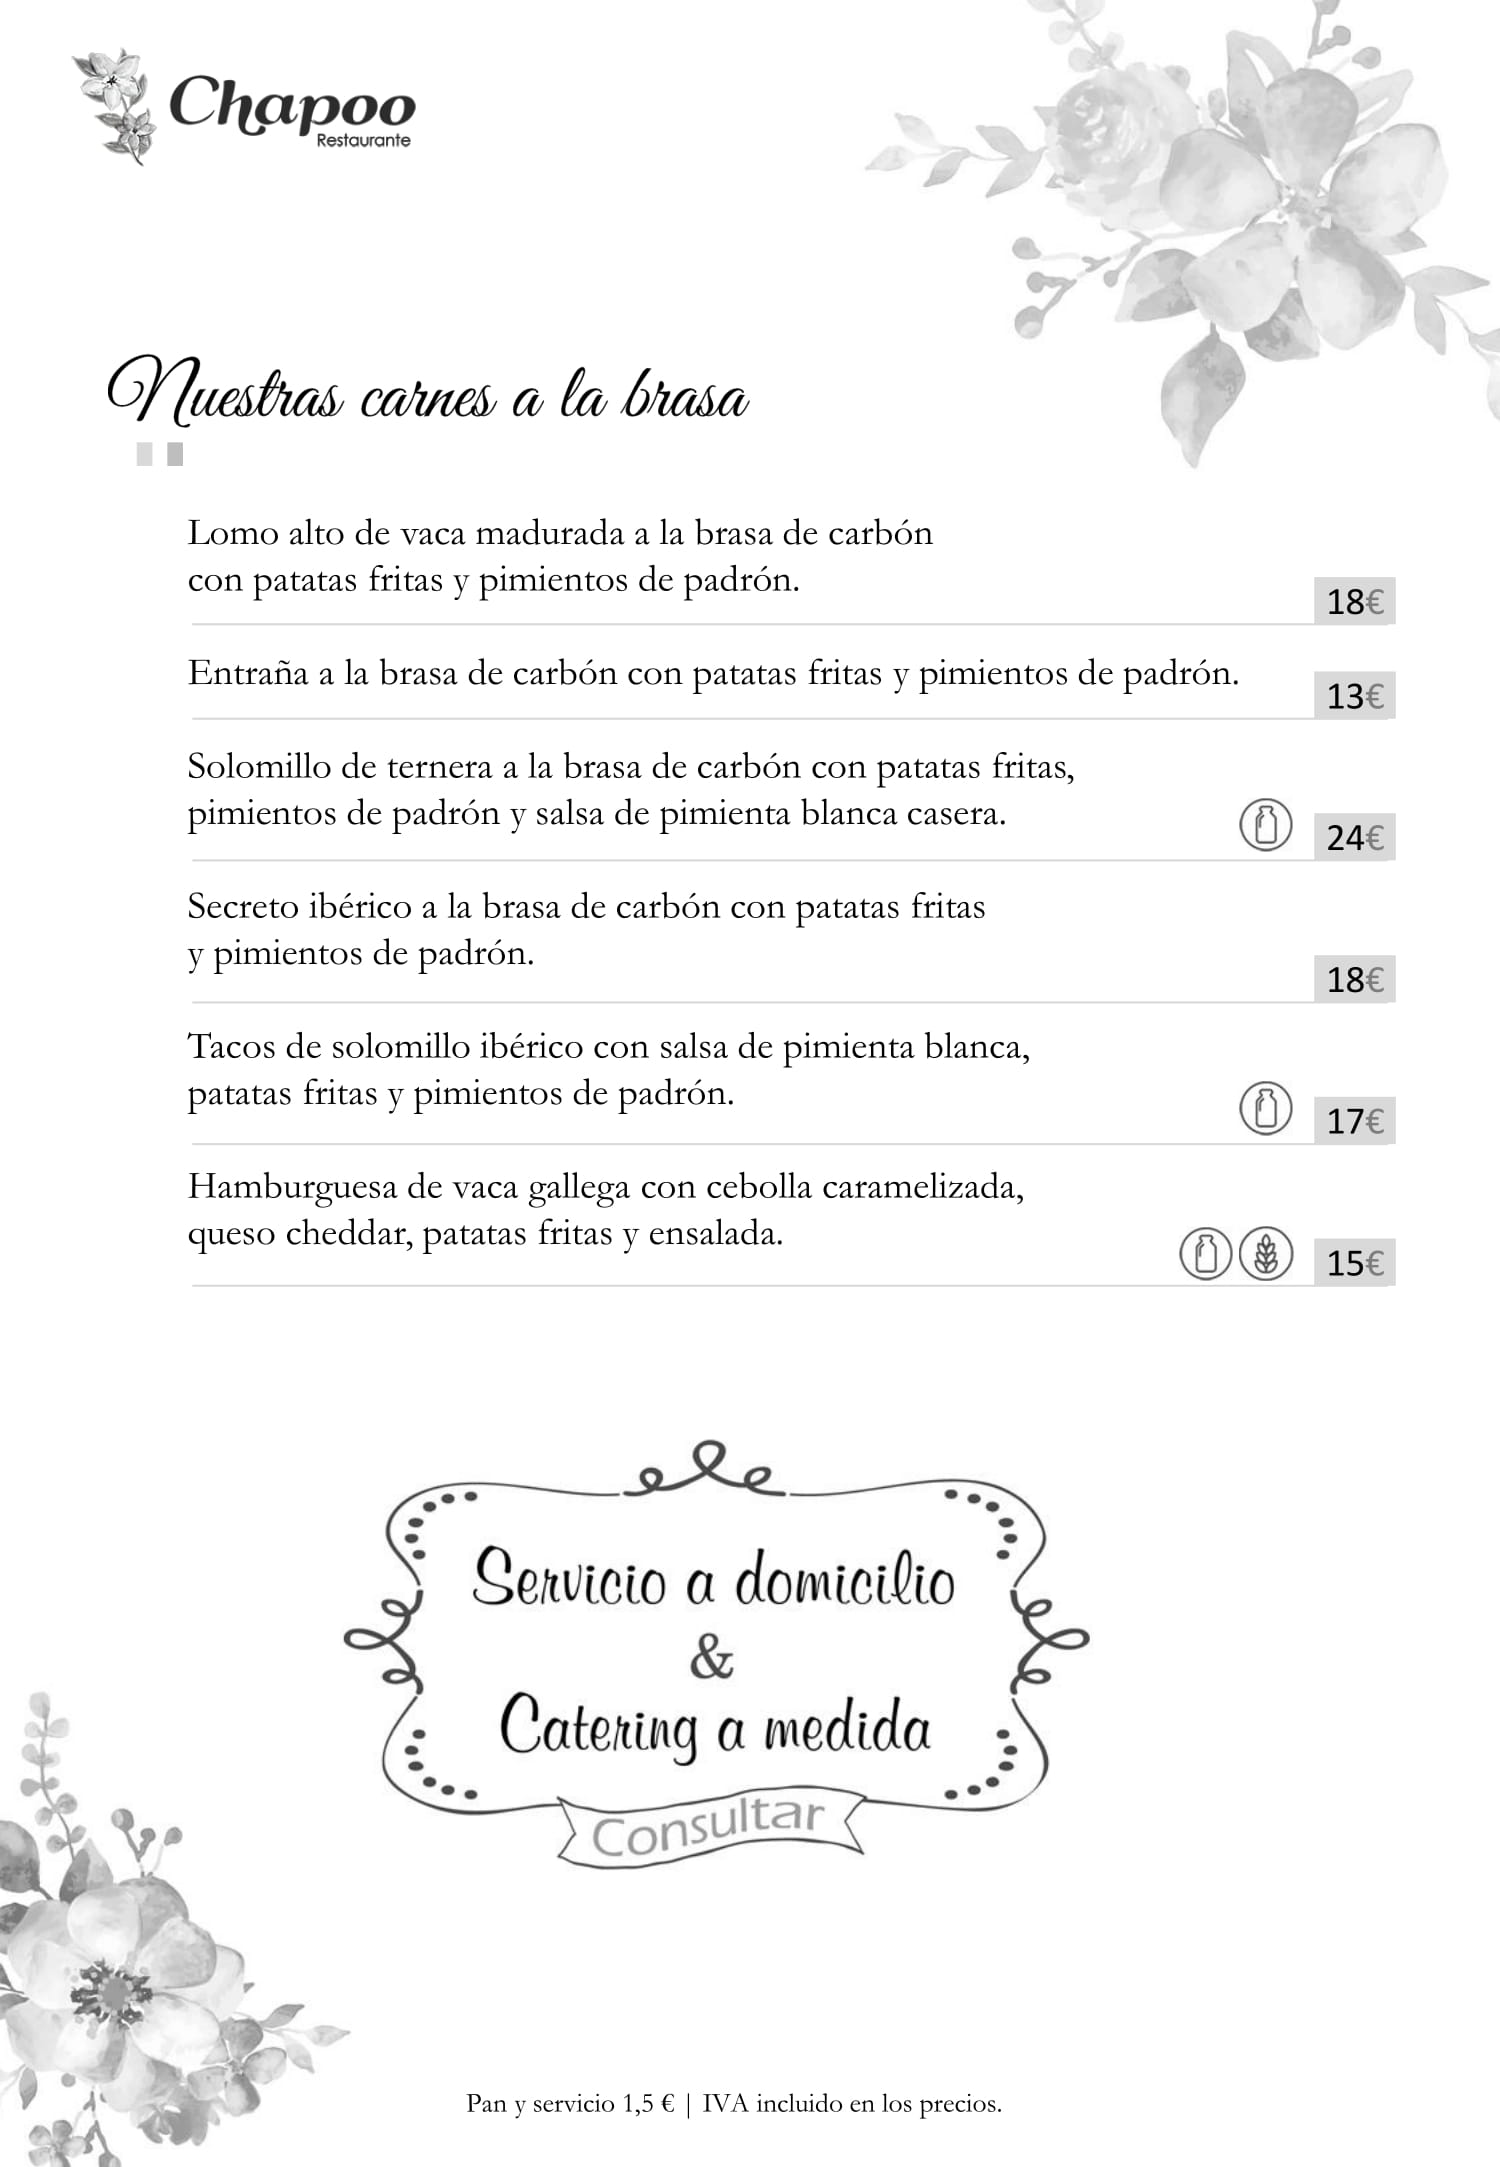 Restaurante Chapoo Carta